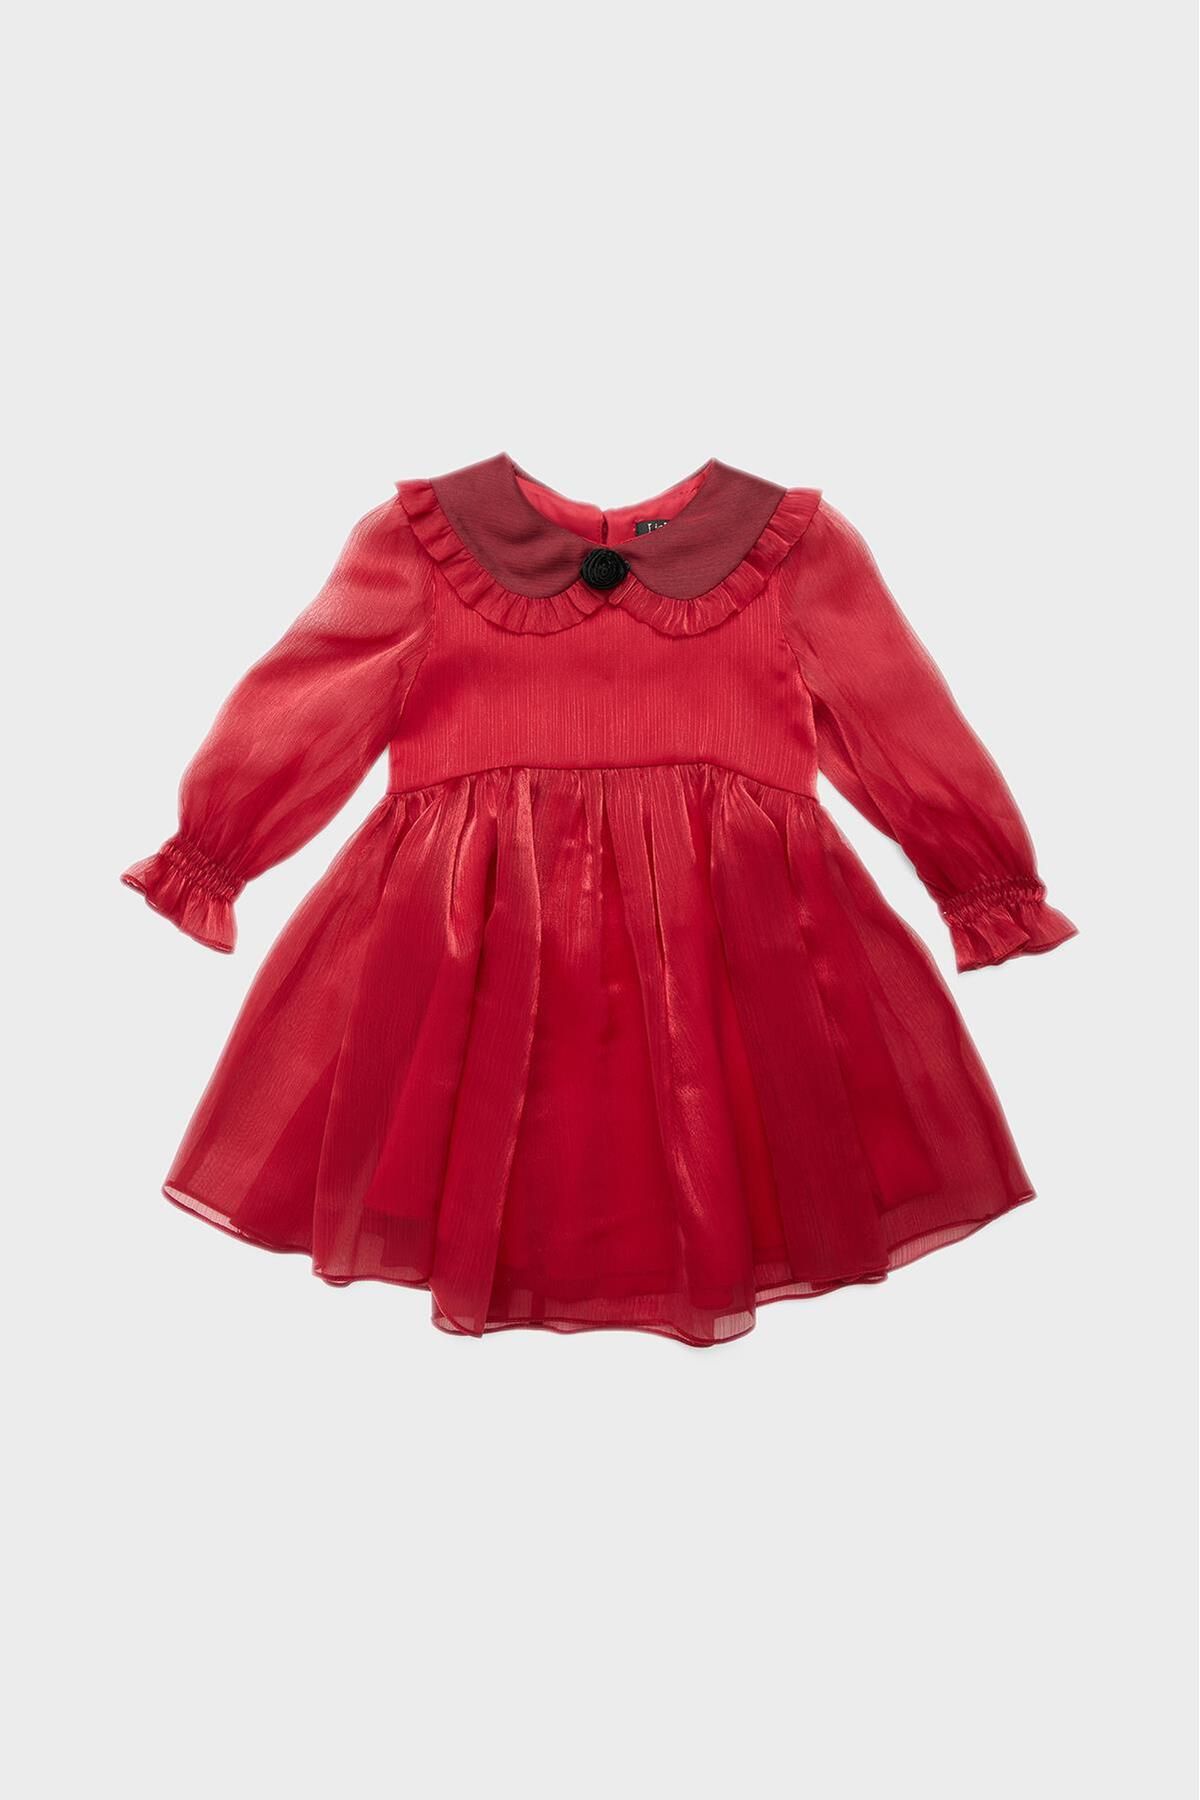 Lia Lea Bg Store Kız Çocuk Kırmızı Elbise 22fw1lb0227